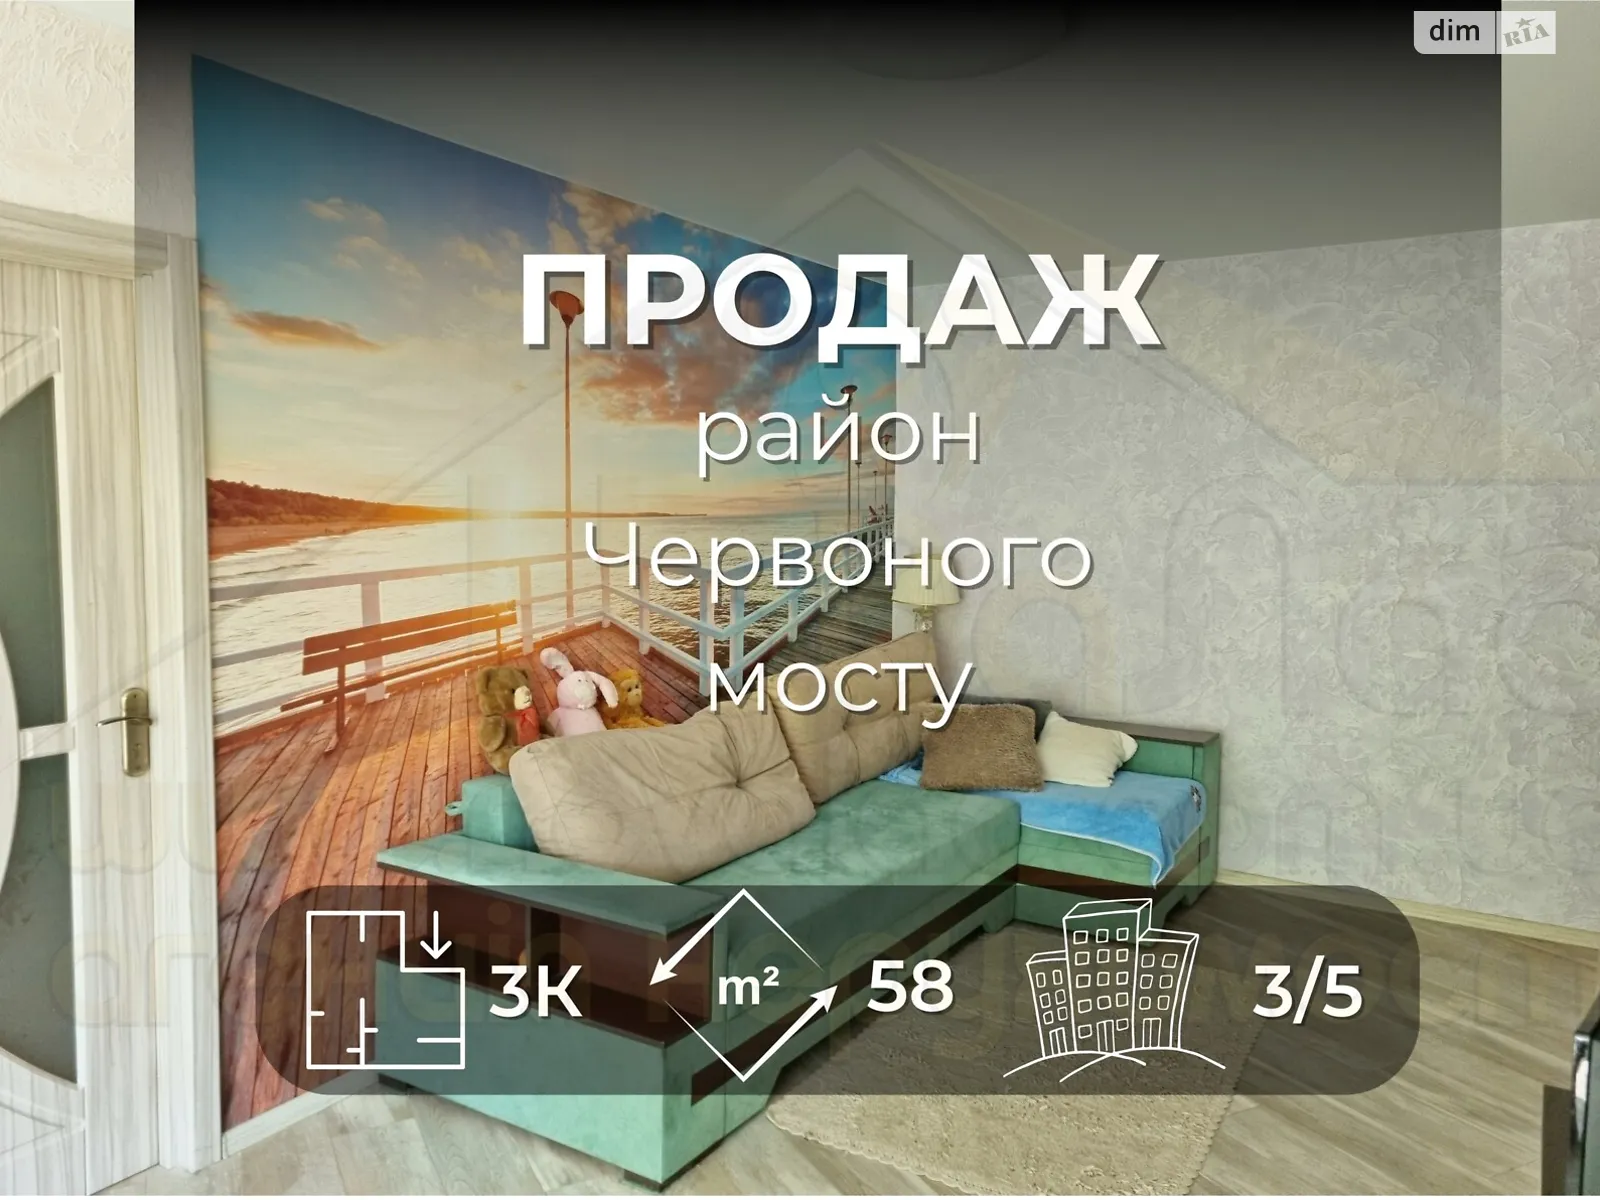 Продается 3-комнатная квартира 58 кв. м в Чернигове - фото 1